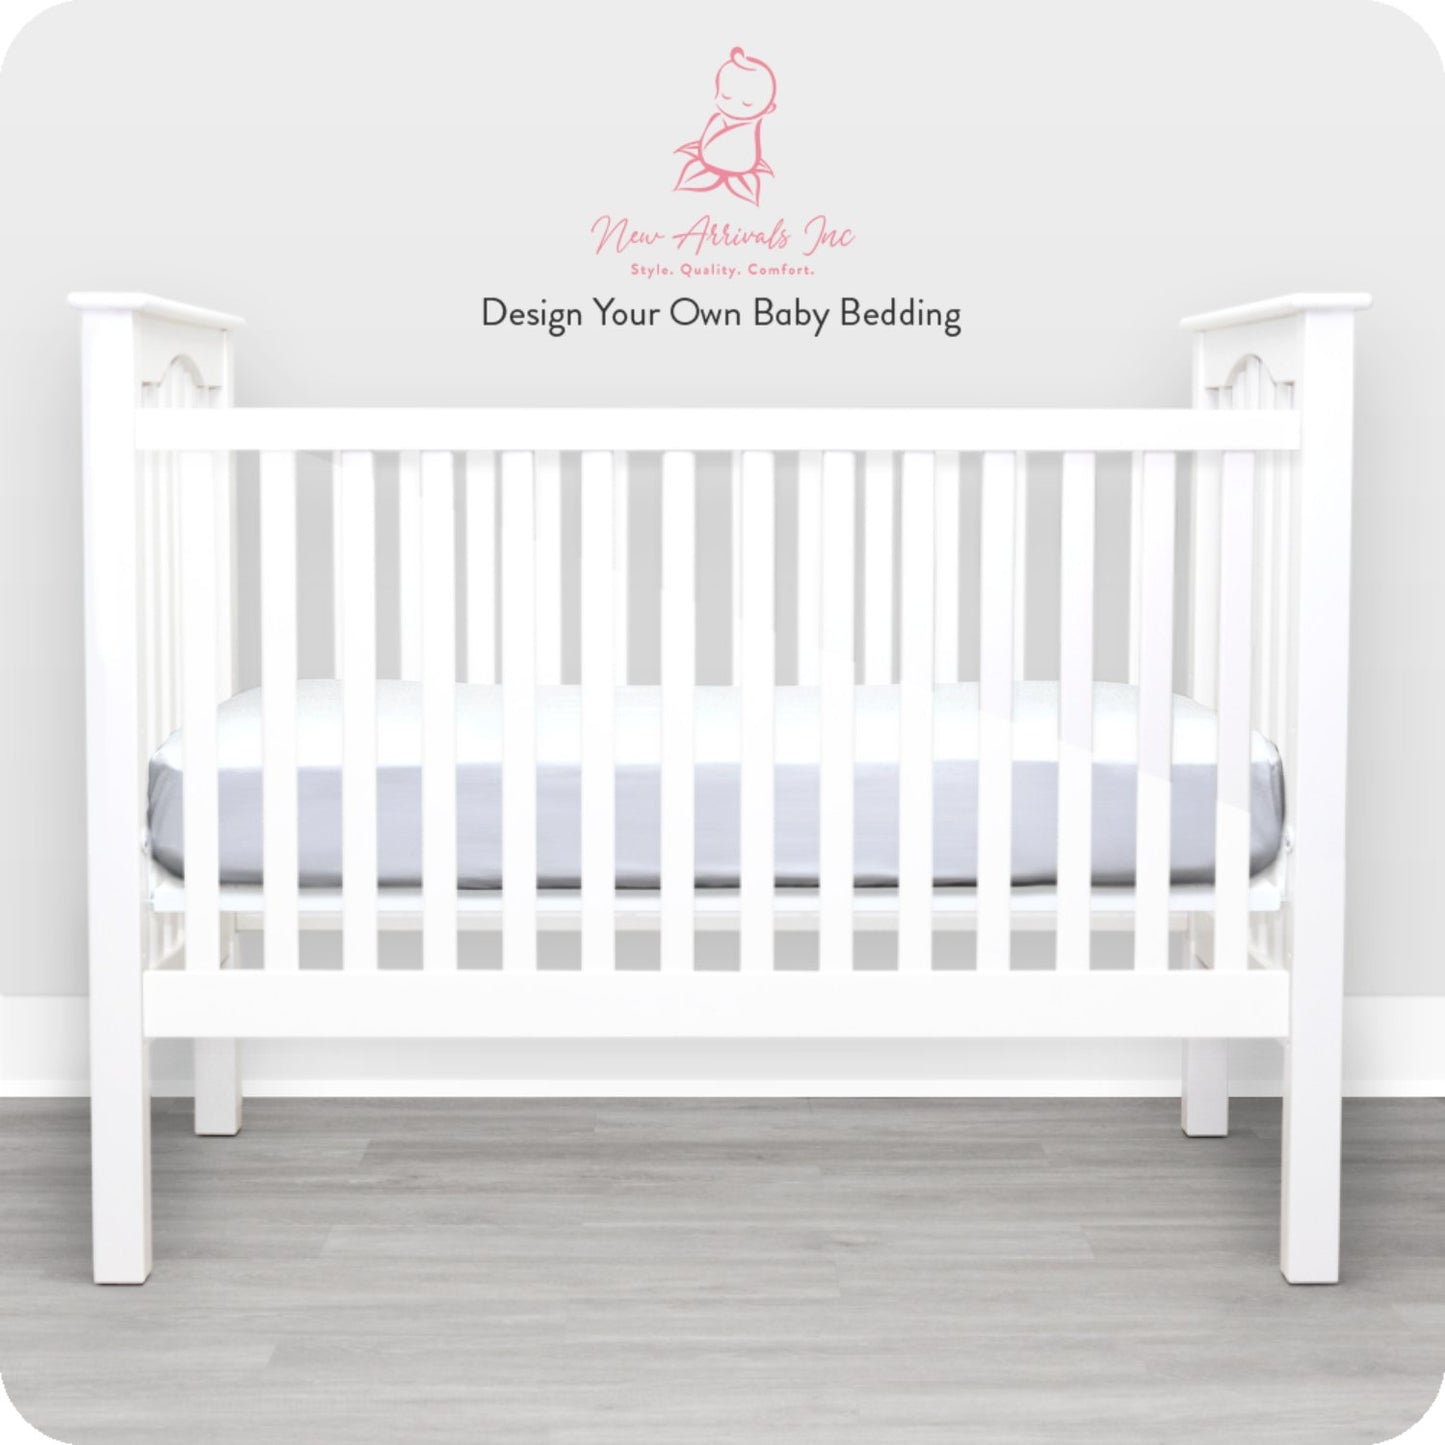 Design Your Own Baby Bedding - Crib Bedding - ID z52OKc_DAnDrSdPU2Cf4j_sb - New Arrivals Inc